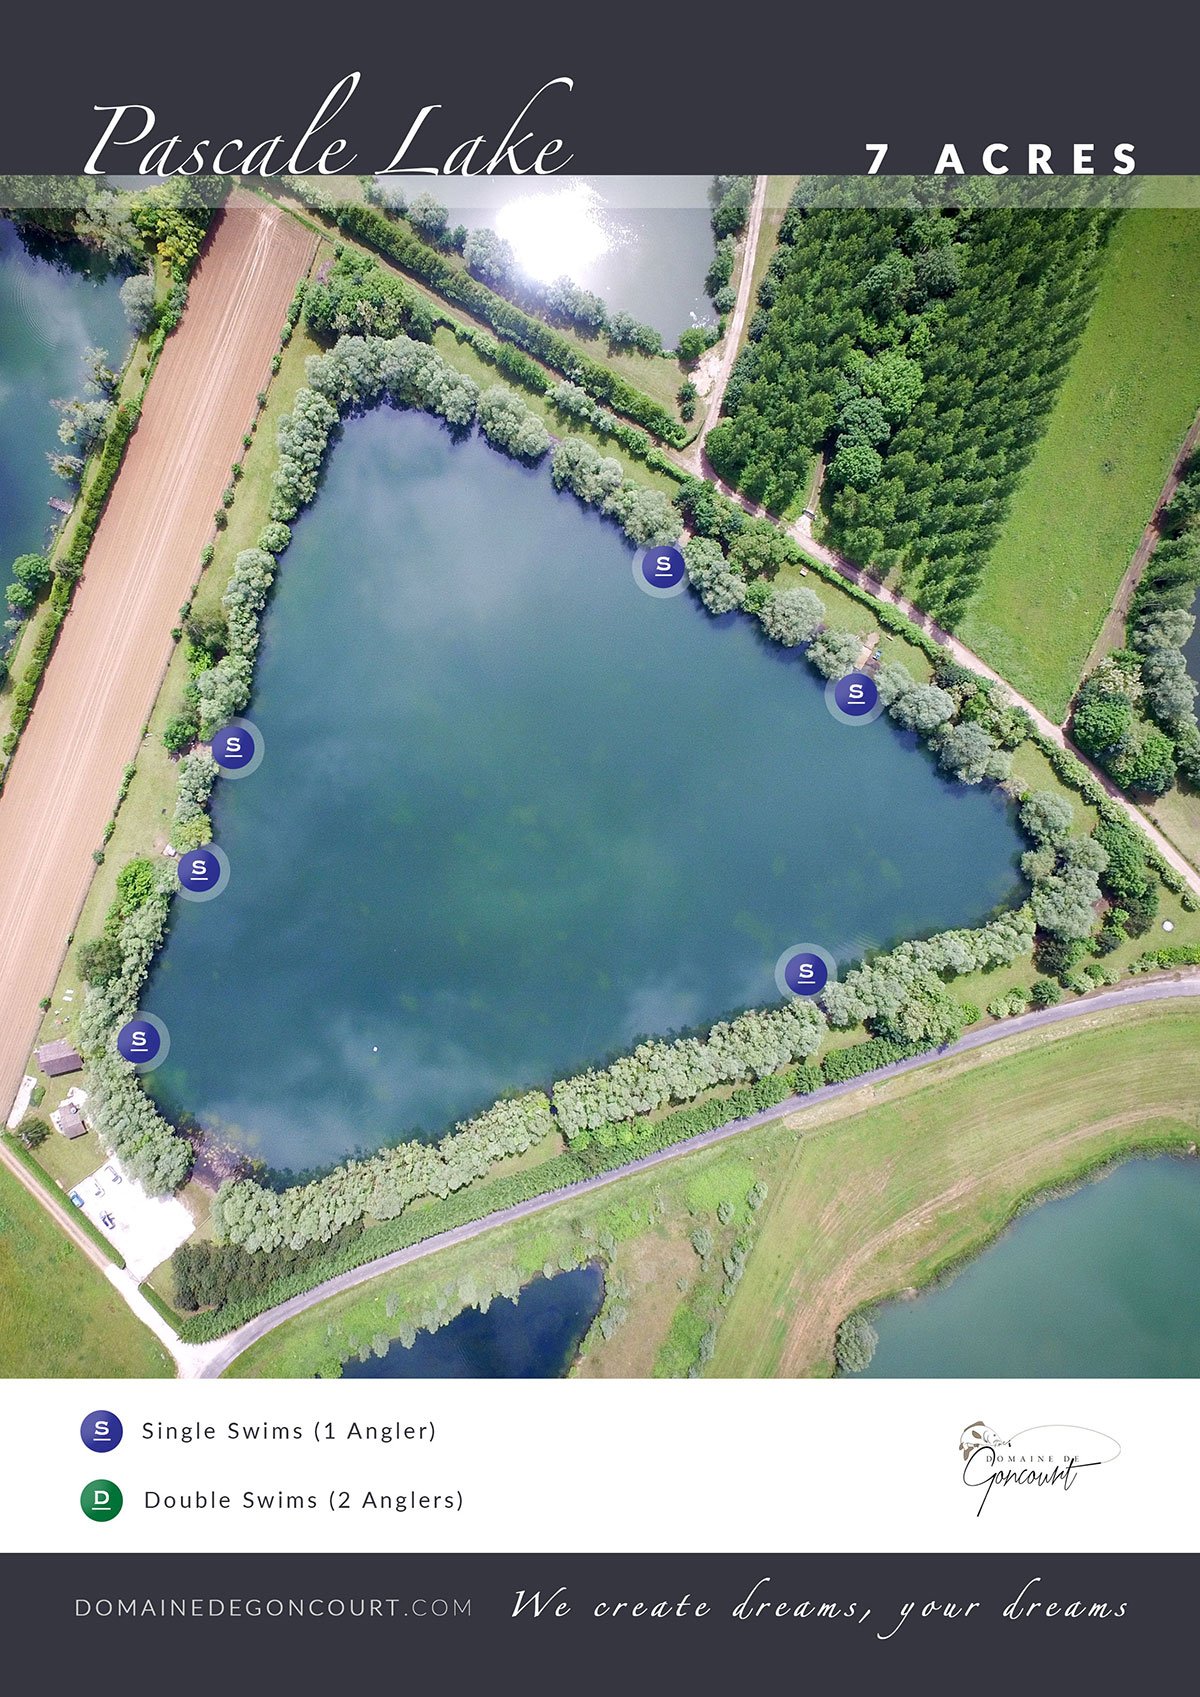 Map of Pascale Lake, Matignicourt-Goncourt France